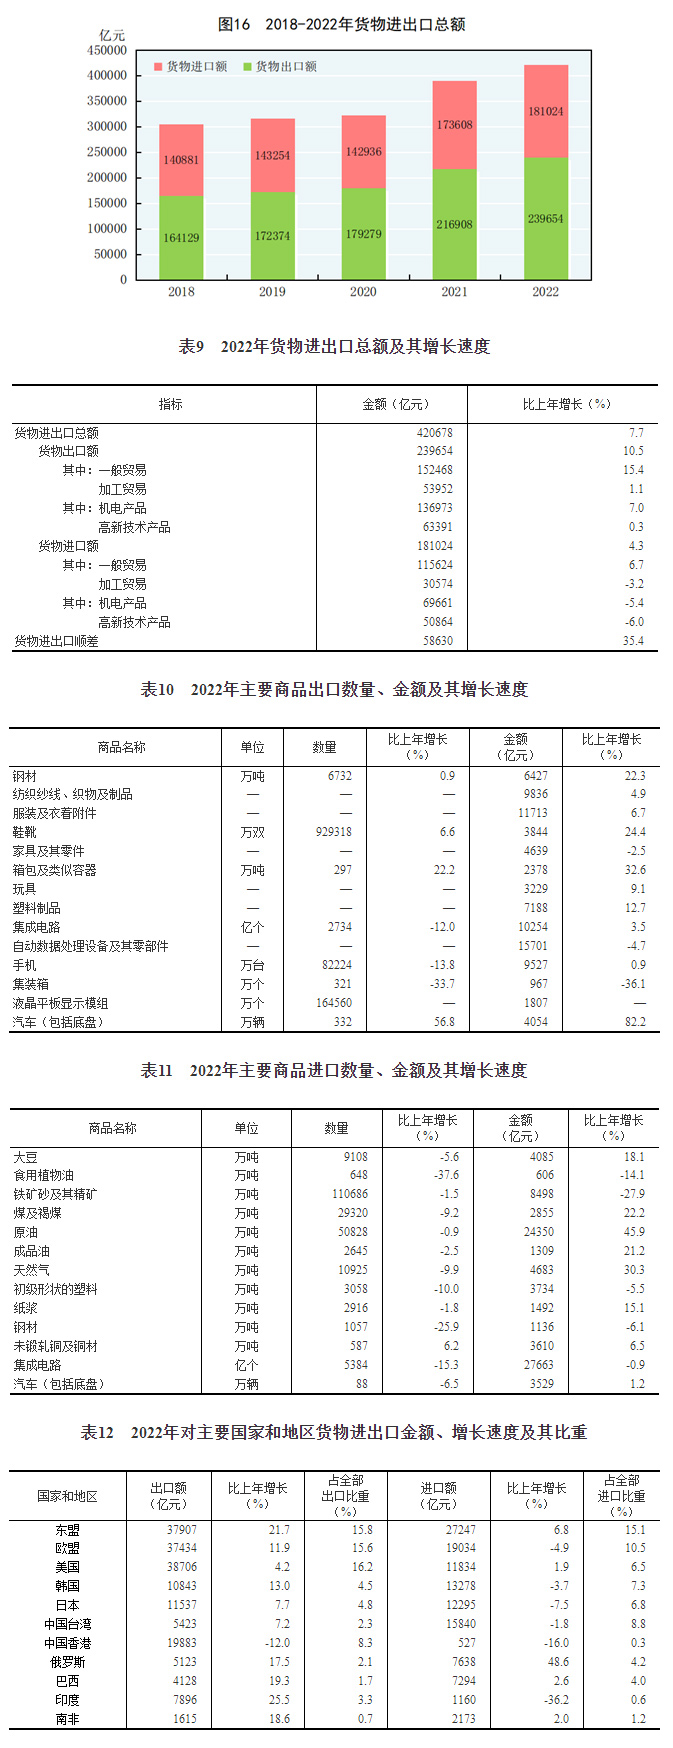 BWIN最新网站中华人民共和国2022年国民经济和社会发展统计公报(图18)